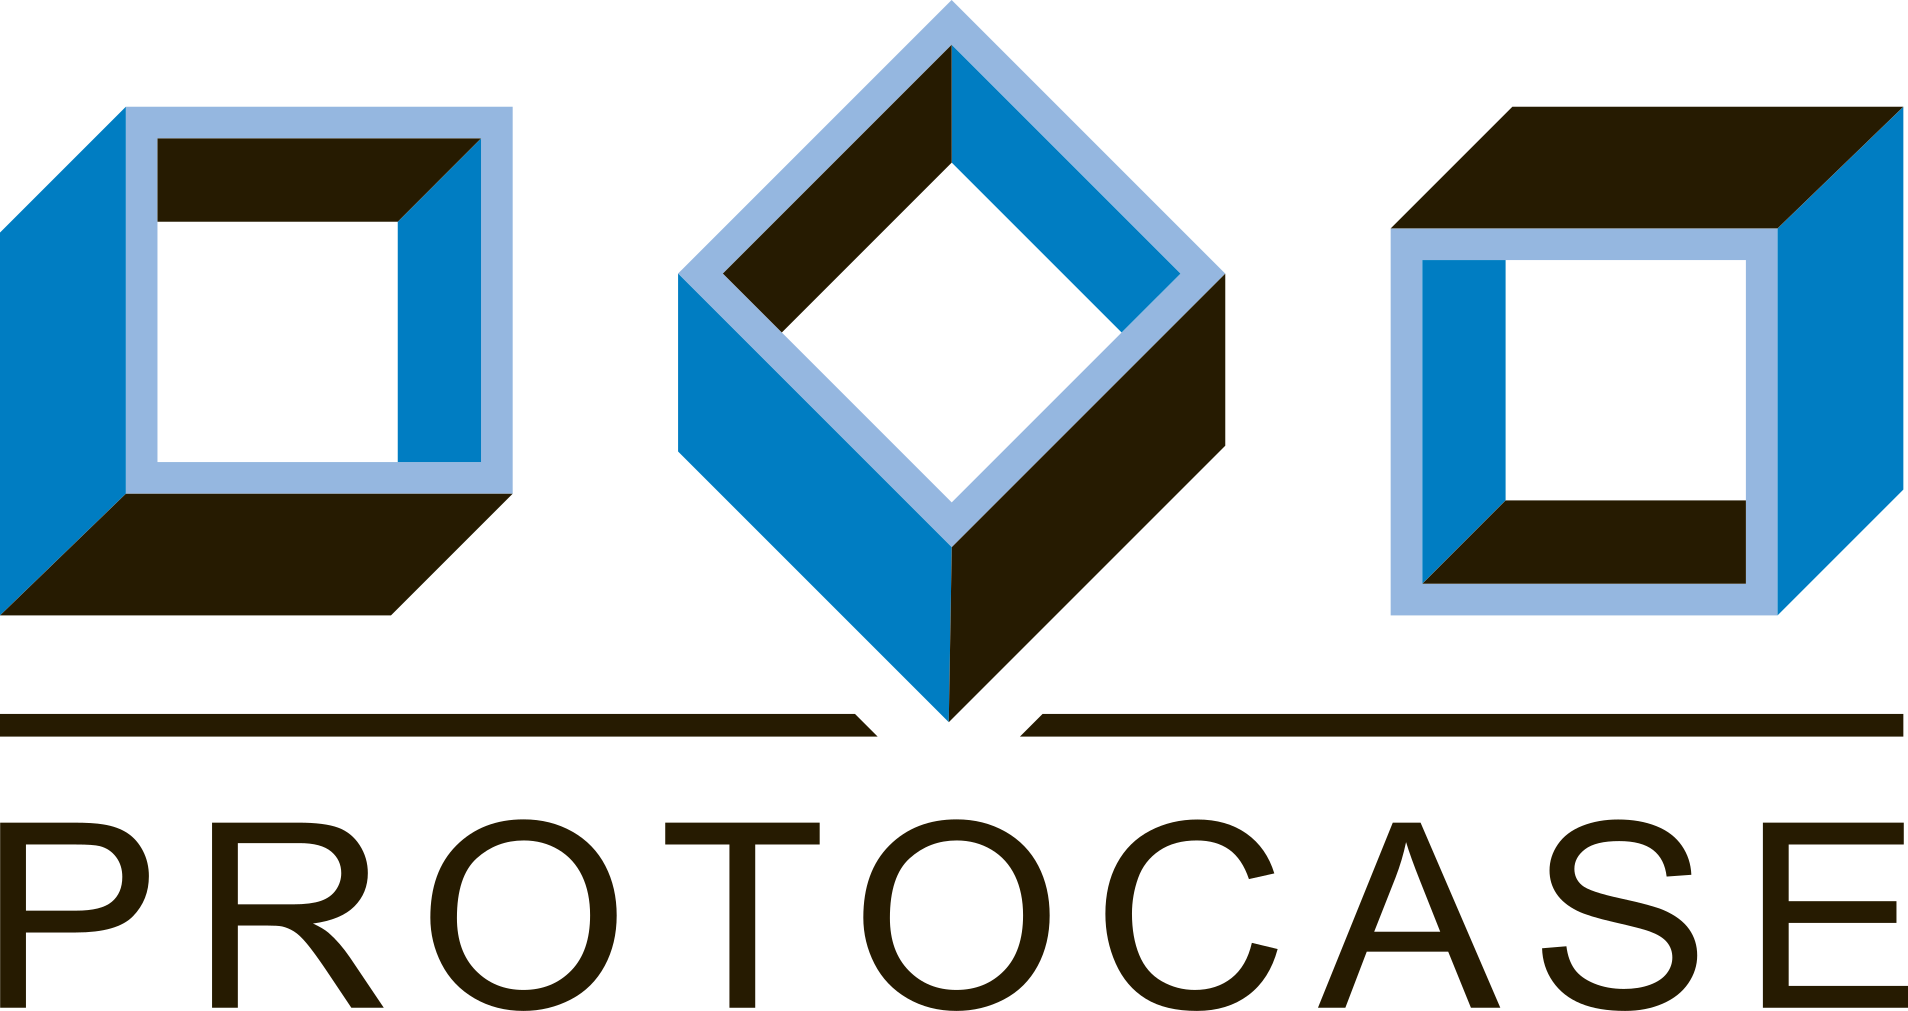 Protocase logo